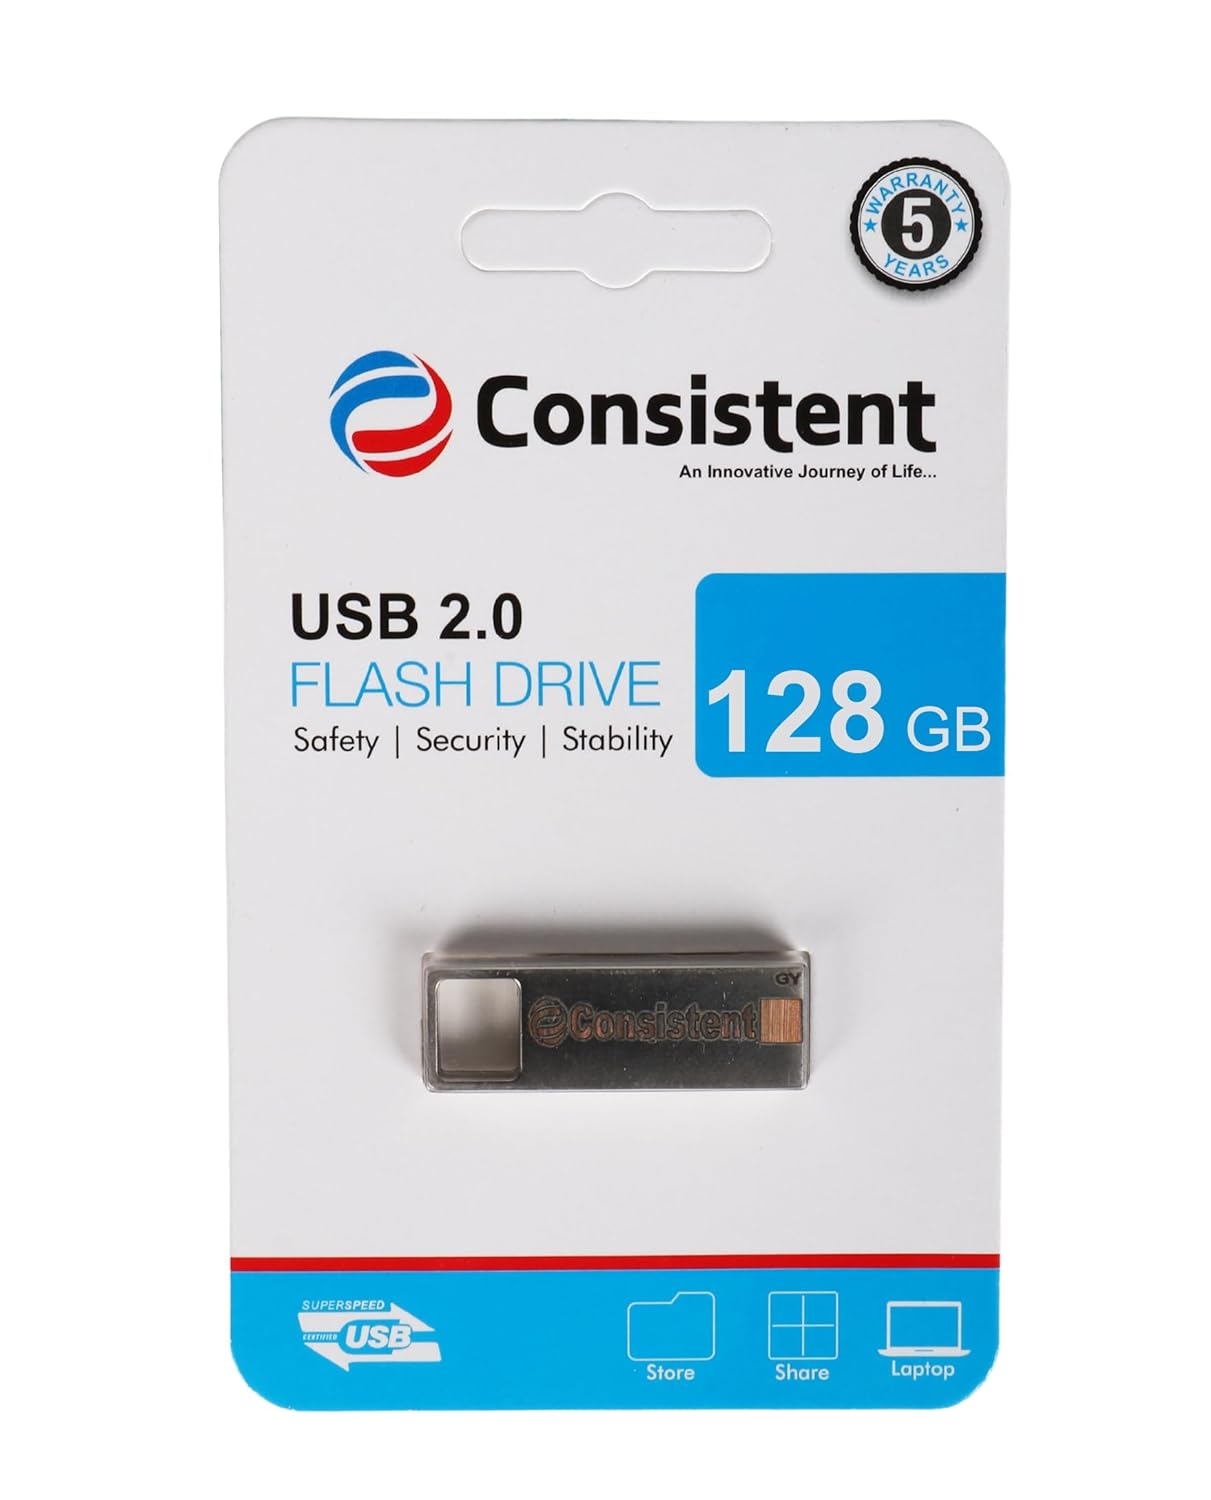 Consistent 128 GB Pen Drive 2.0 (Grey) 5 Year Warranty(CTP10128)